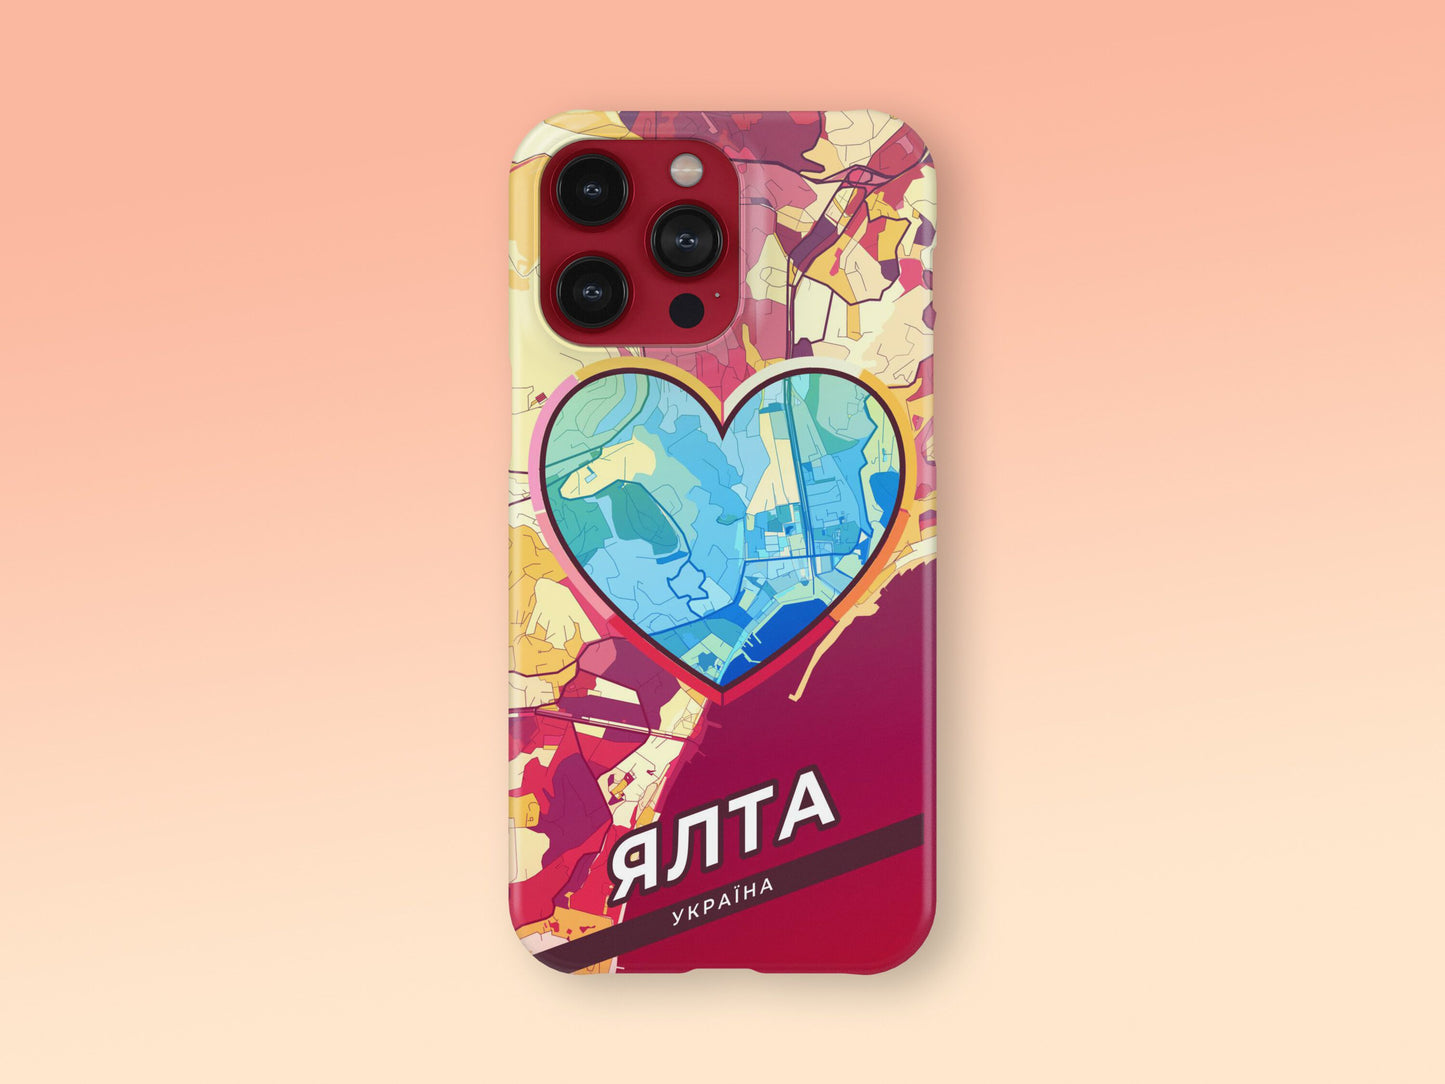 Yalta Ukraine slim phone case with colorful icon 2